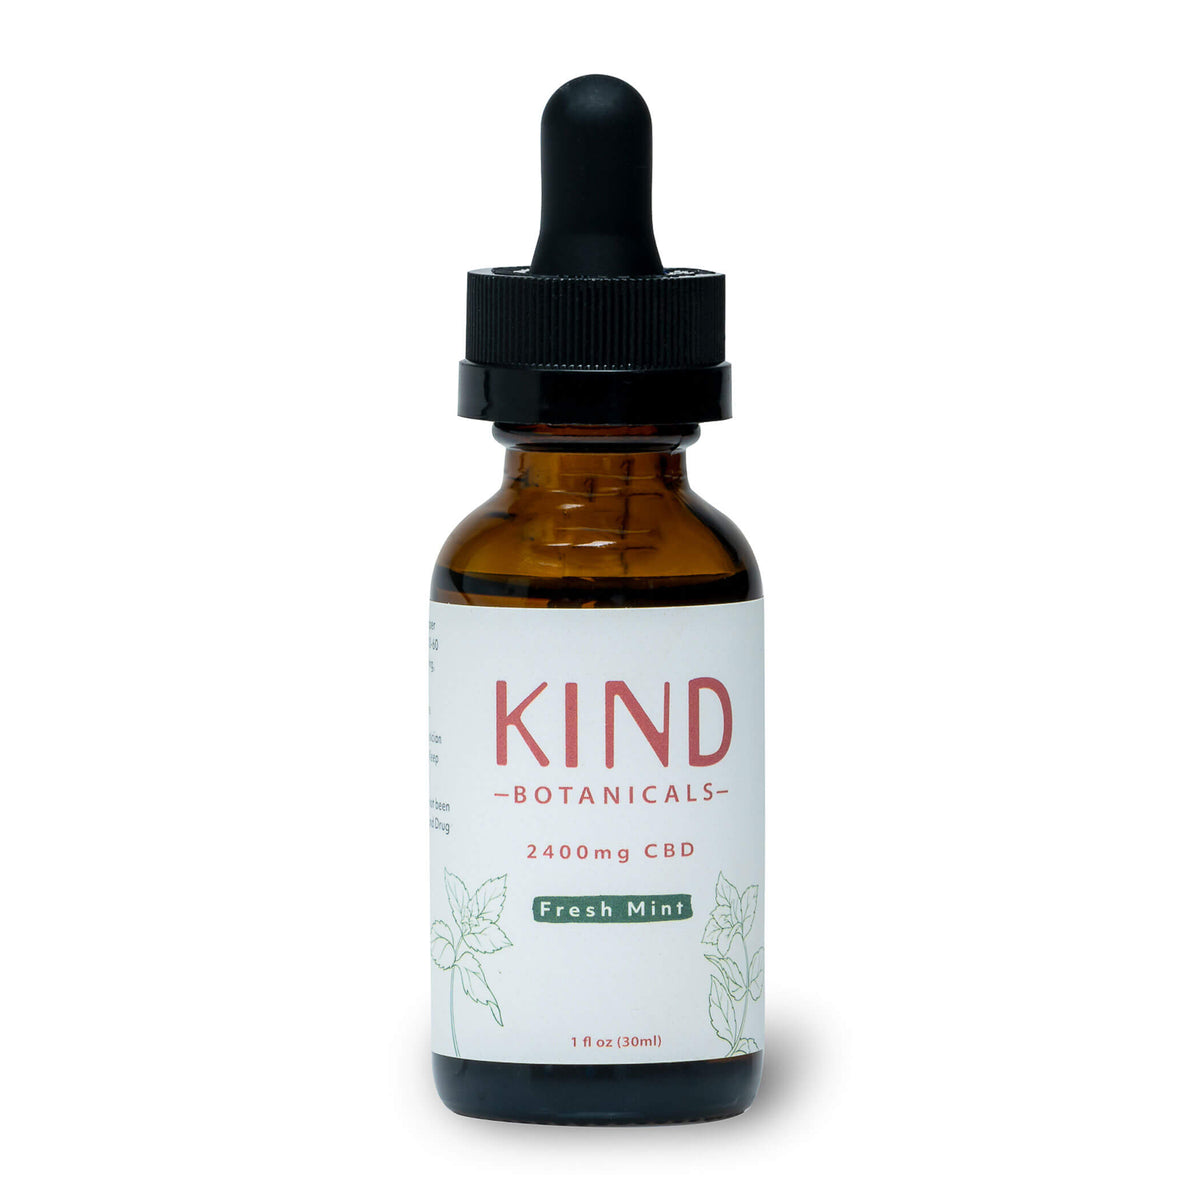 Kind Botanicals 2400mg hemp oil mint flavored